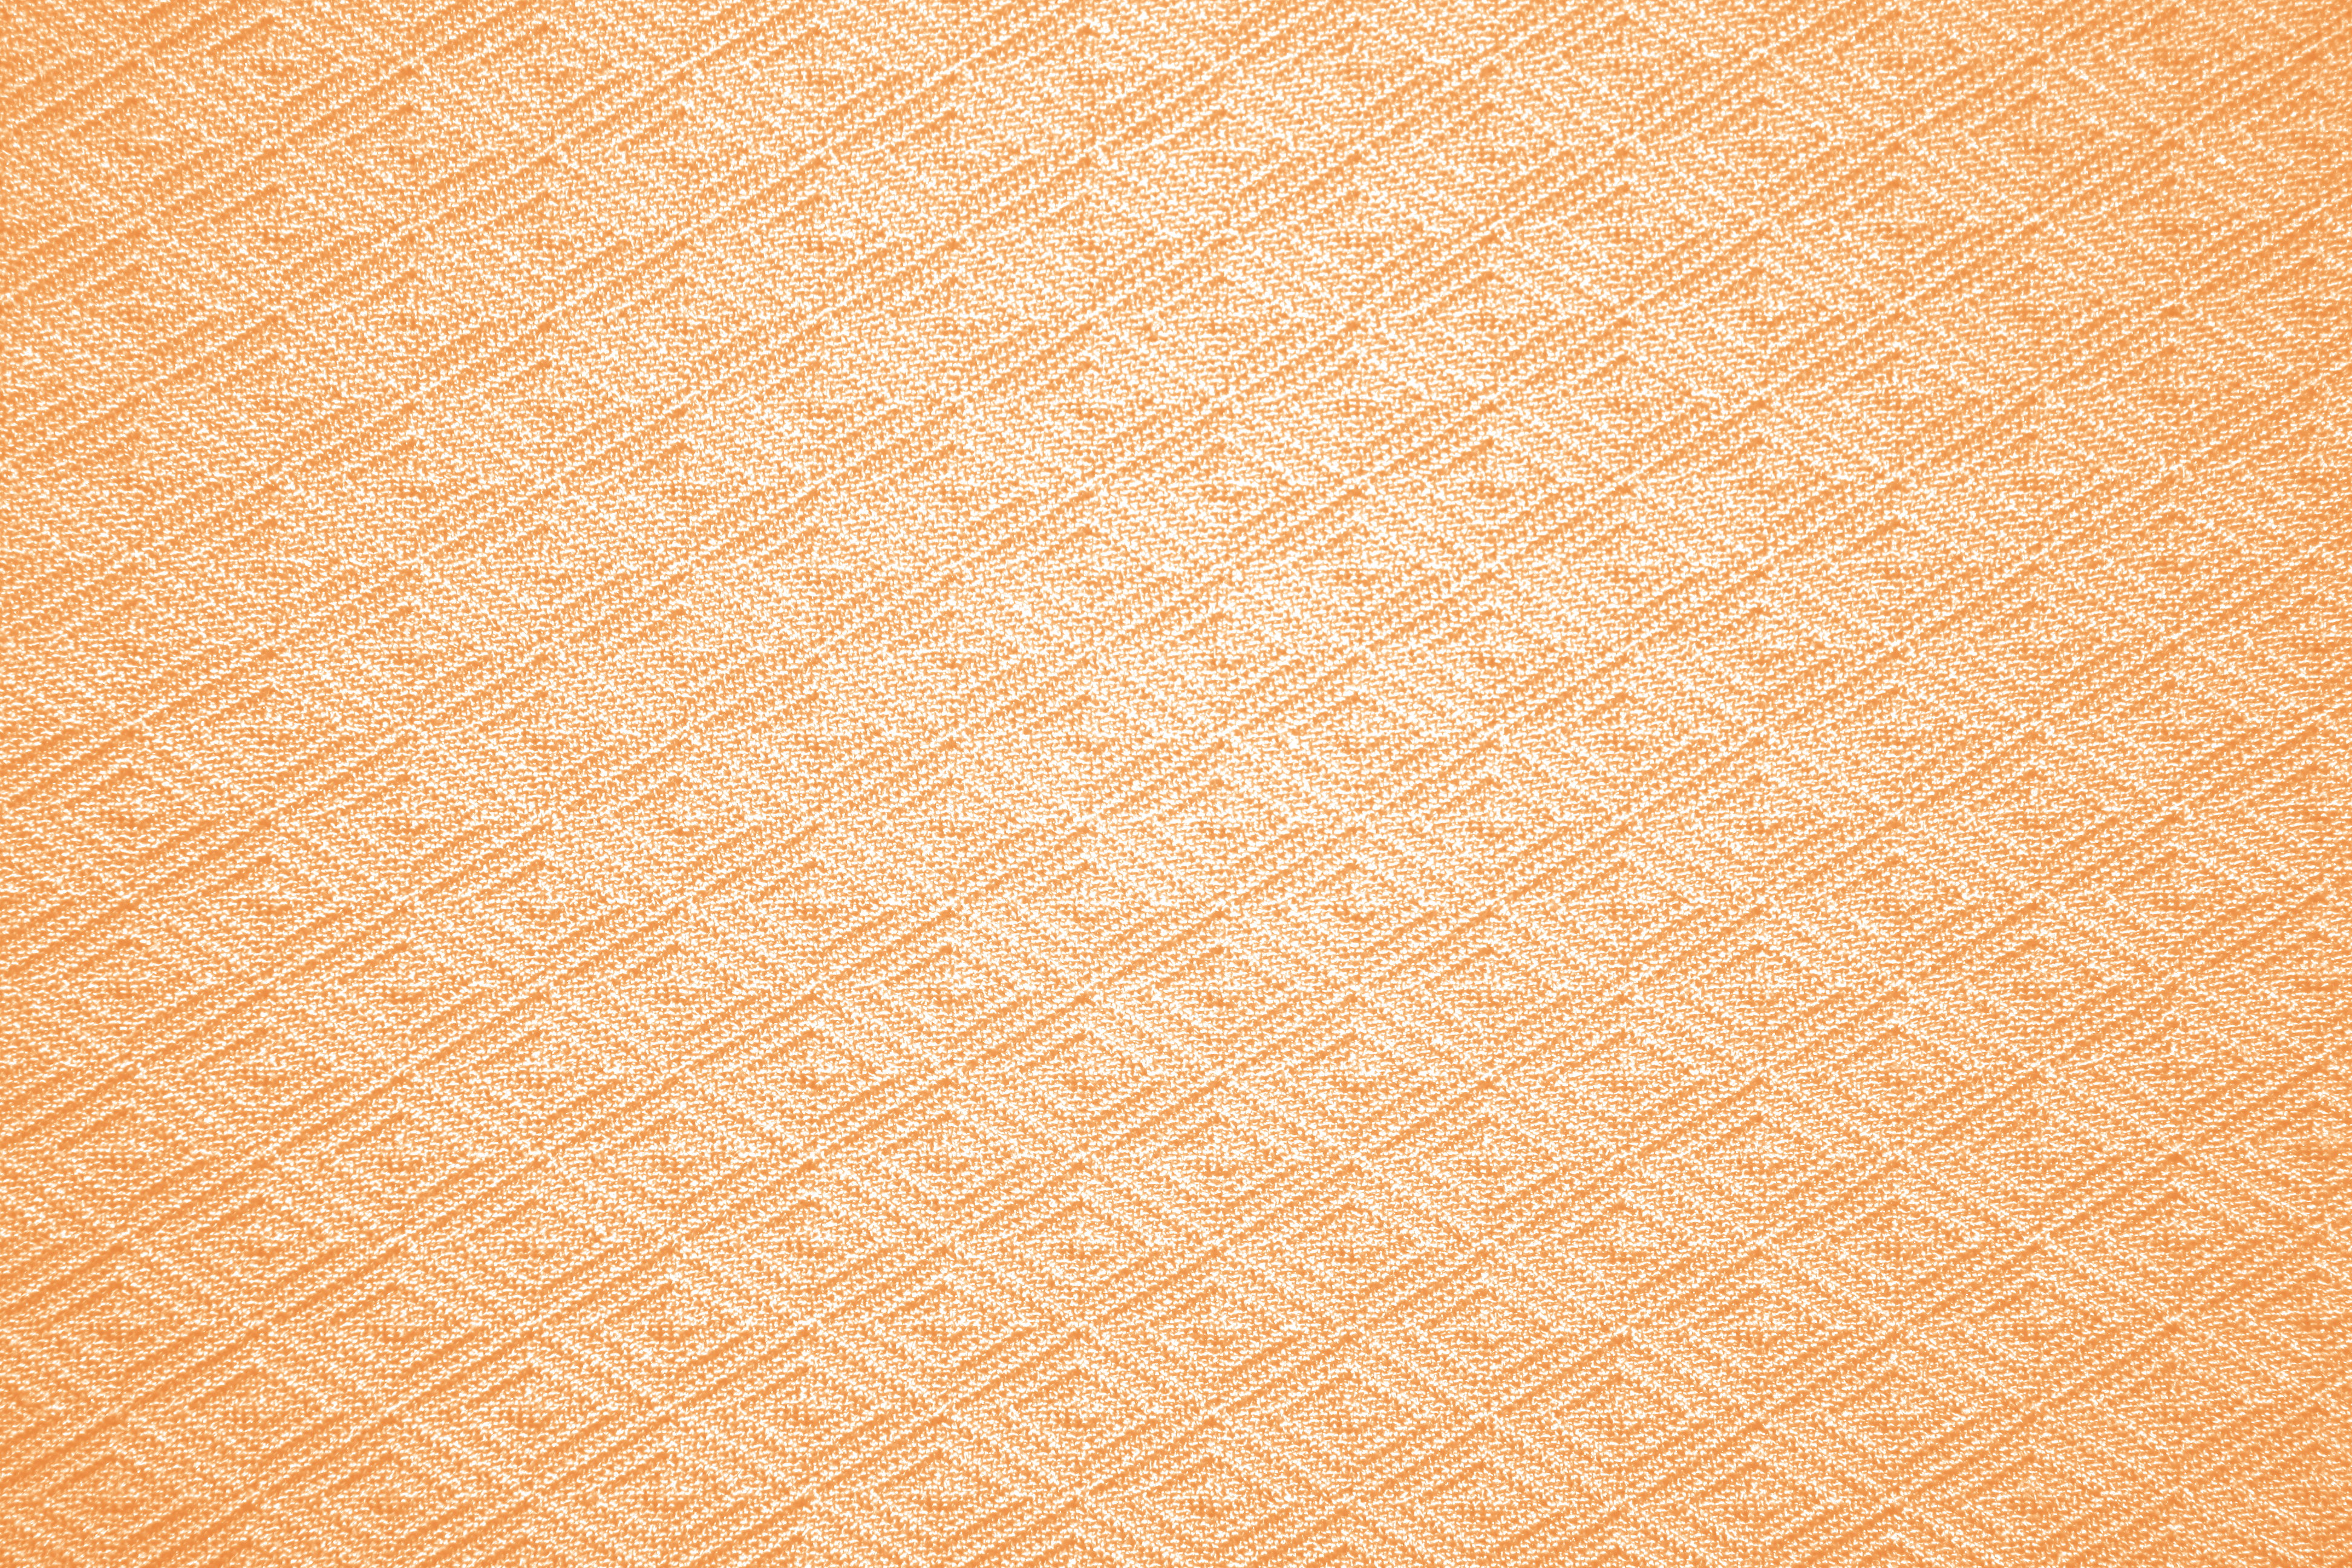 Light Orange Knit Fabric with Diamond Pattern Texture Picture | Free  Photograph | Photos Public Domain